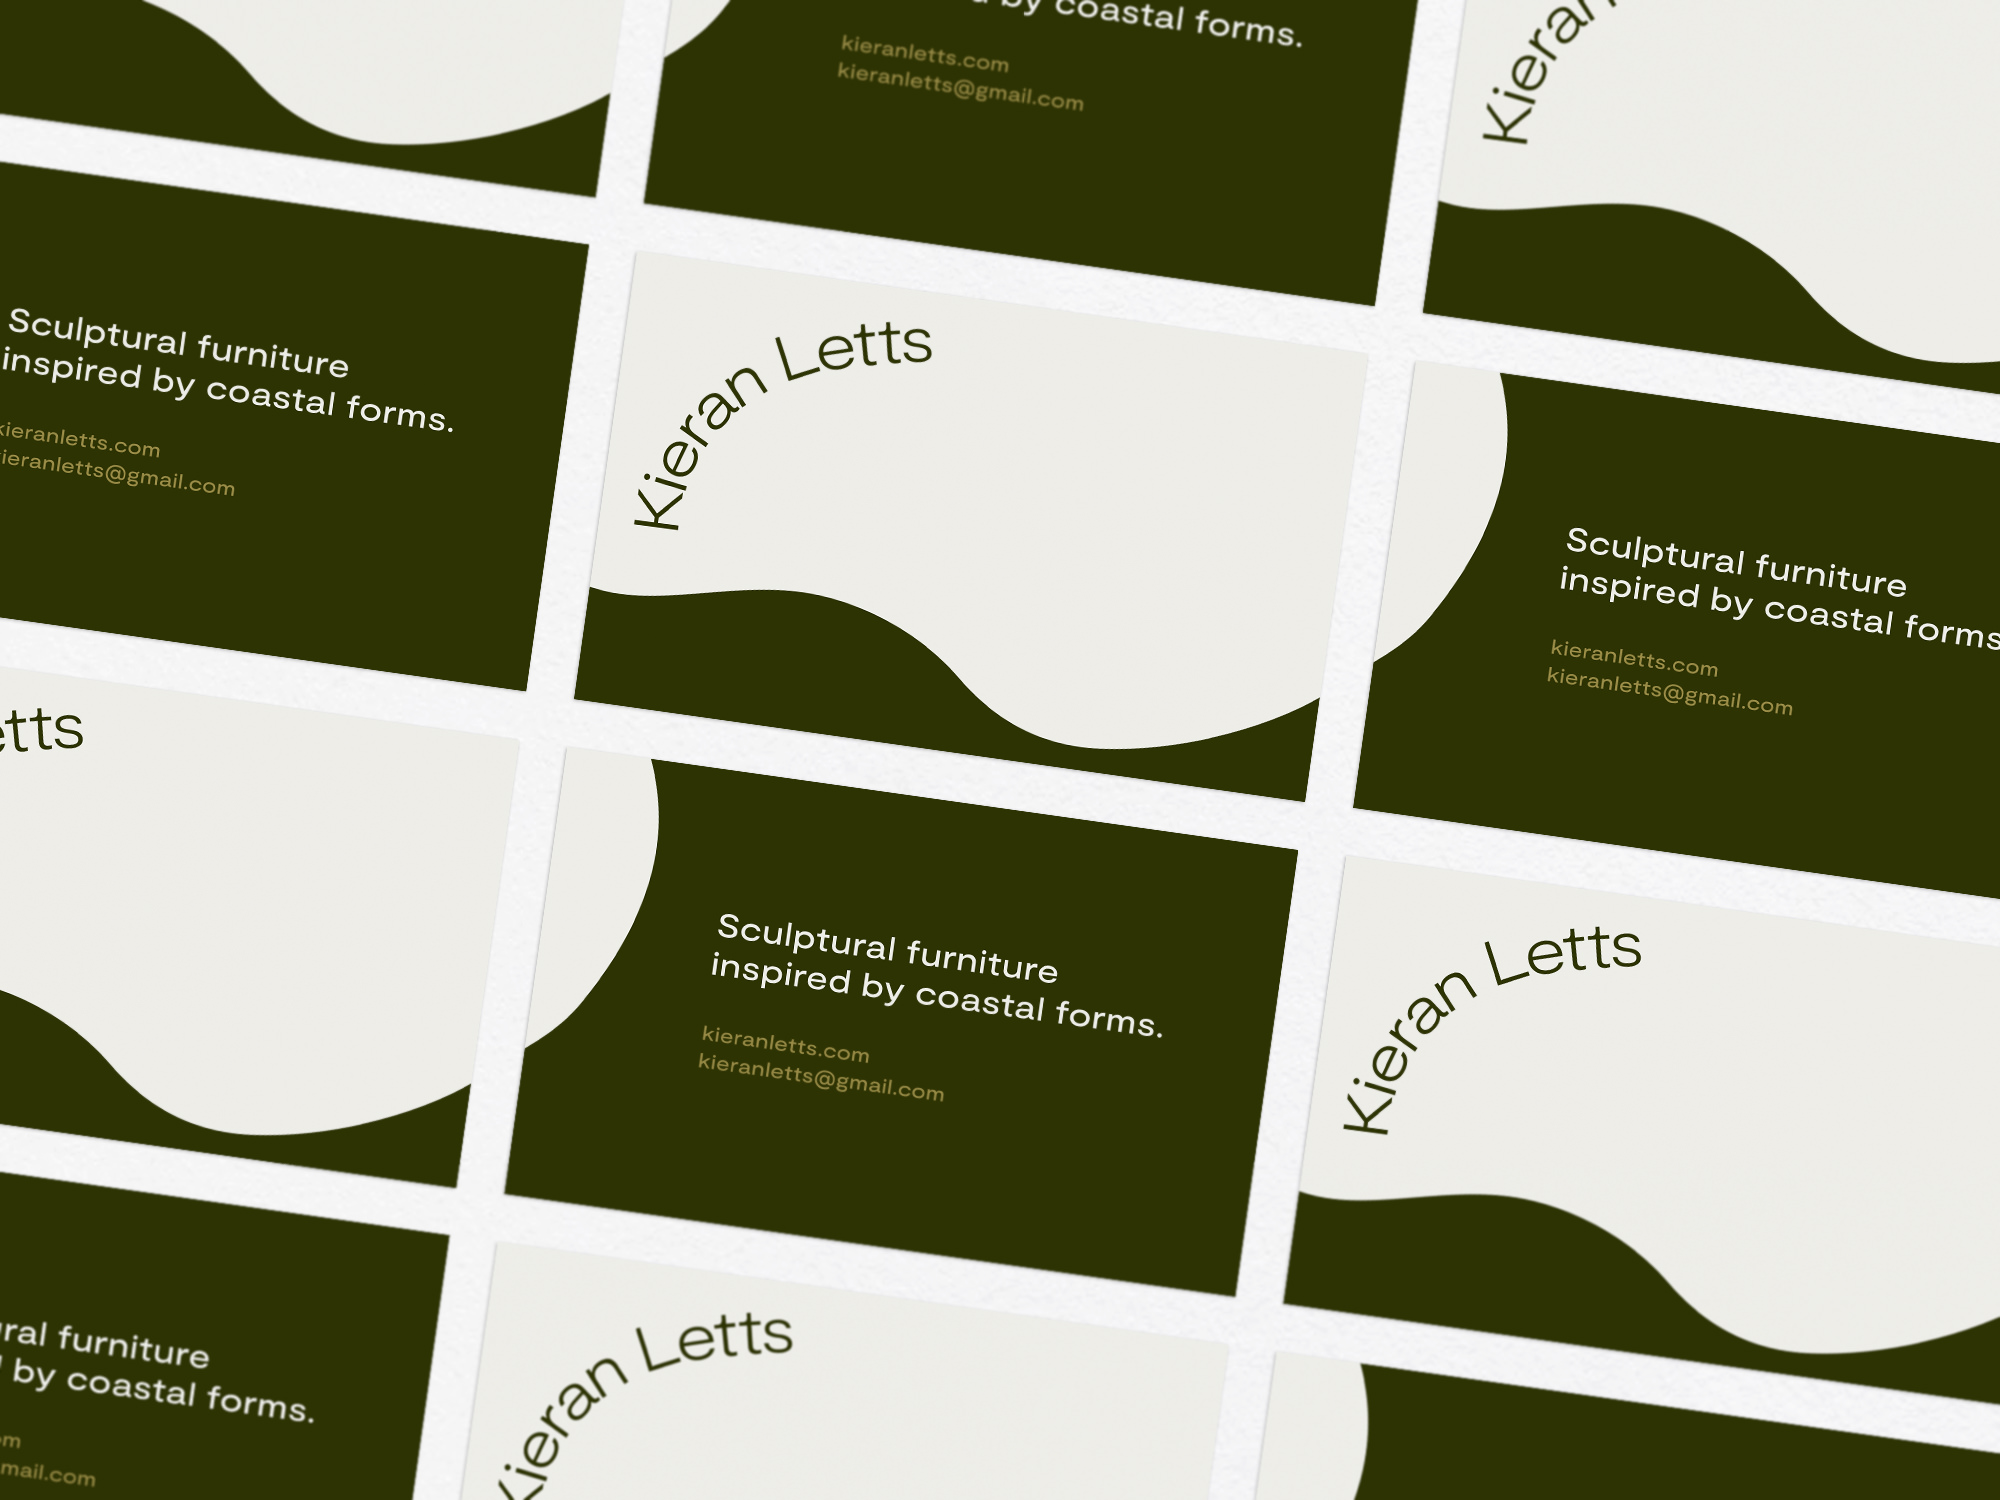 Kieran Letts business cards